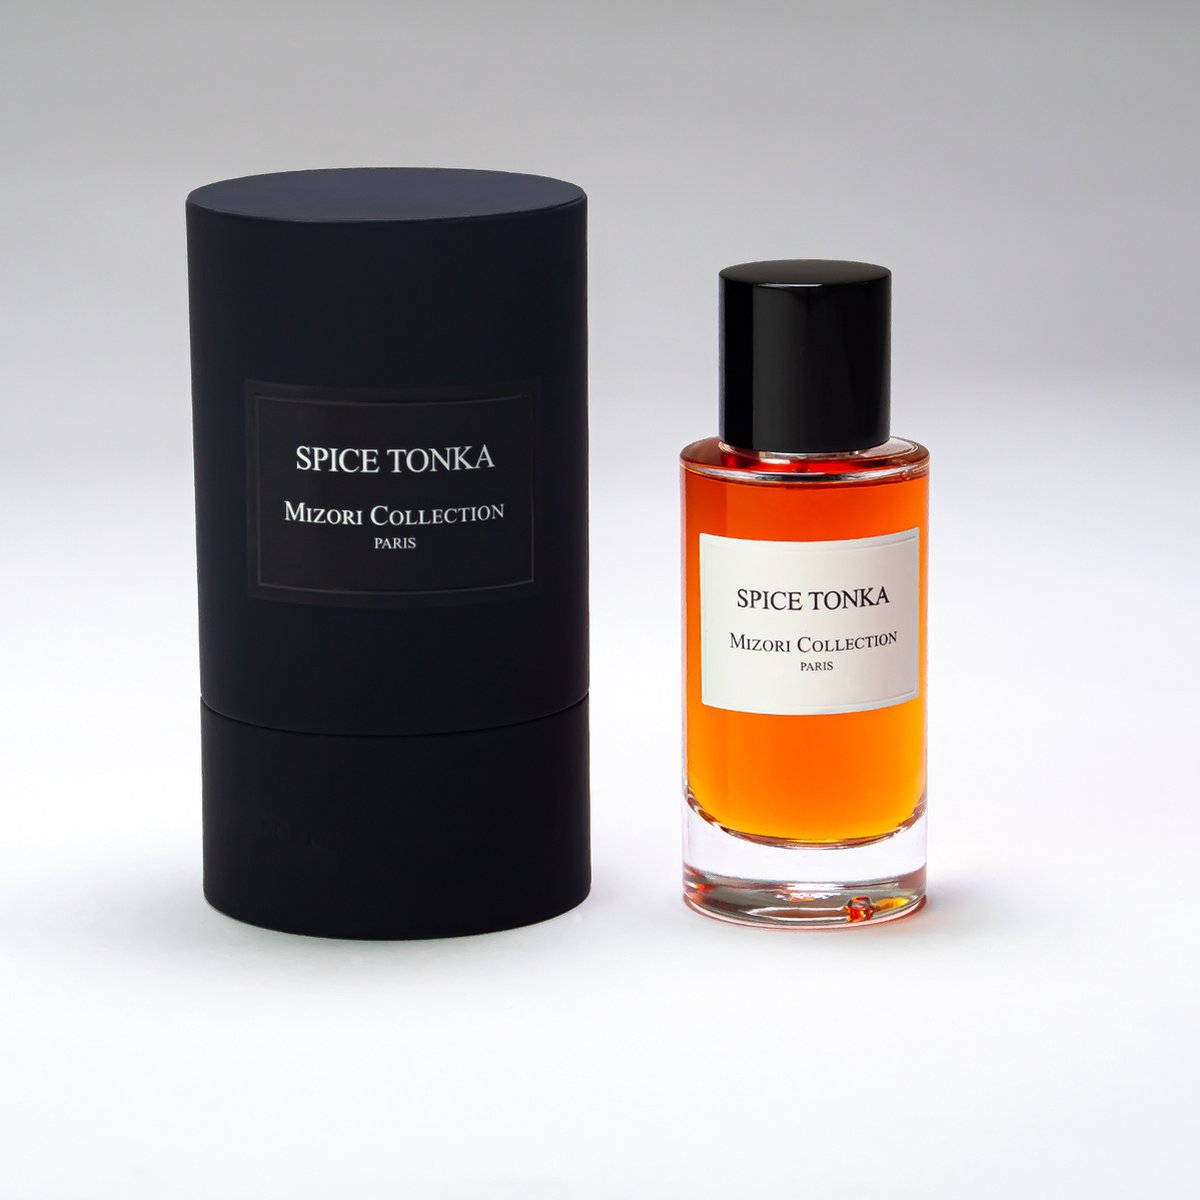 Spice Tonka - Mizori Collection Paris - High Exclusive Perfume - Eau de Parfum - 50 ml - Niche Perfume